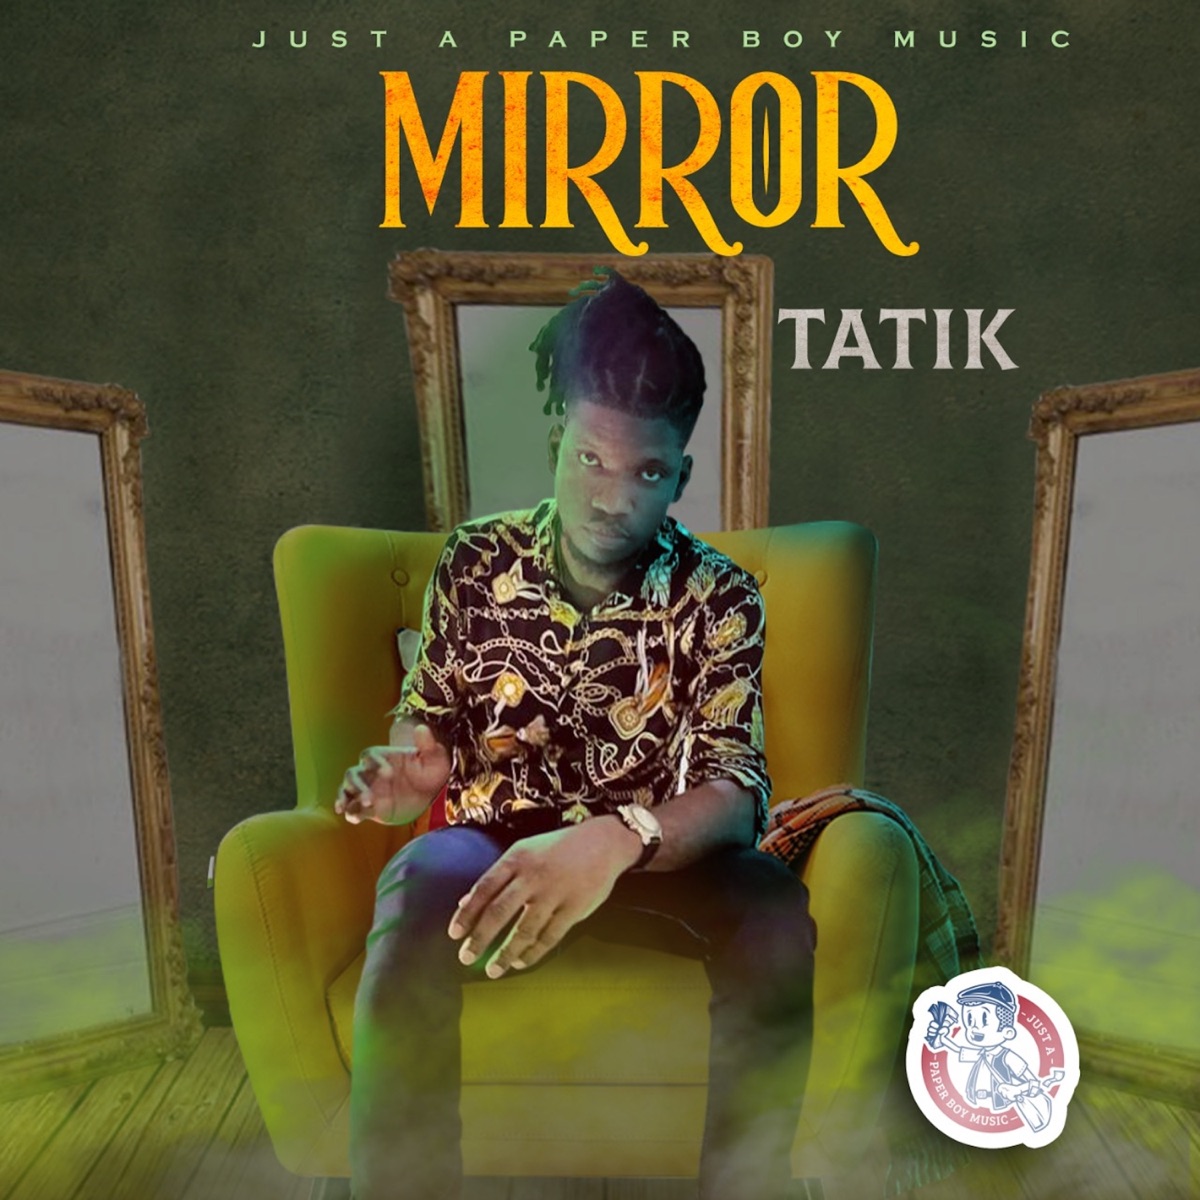 Tatik – Strongest Soldier List Lyrics